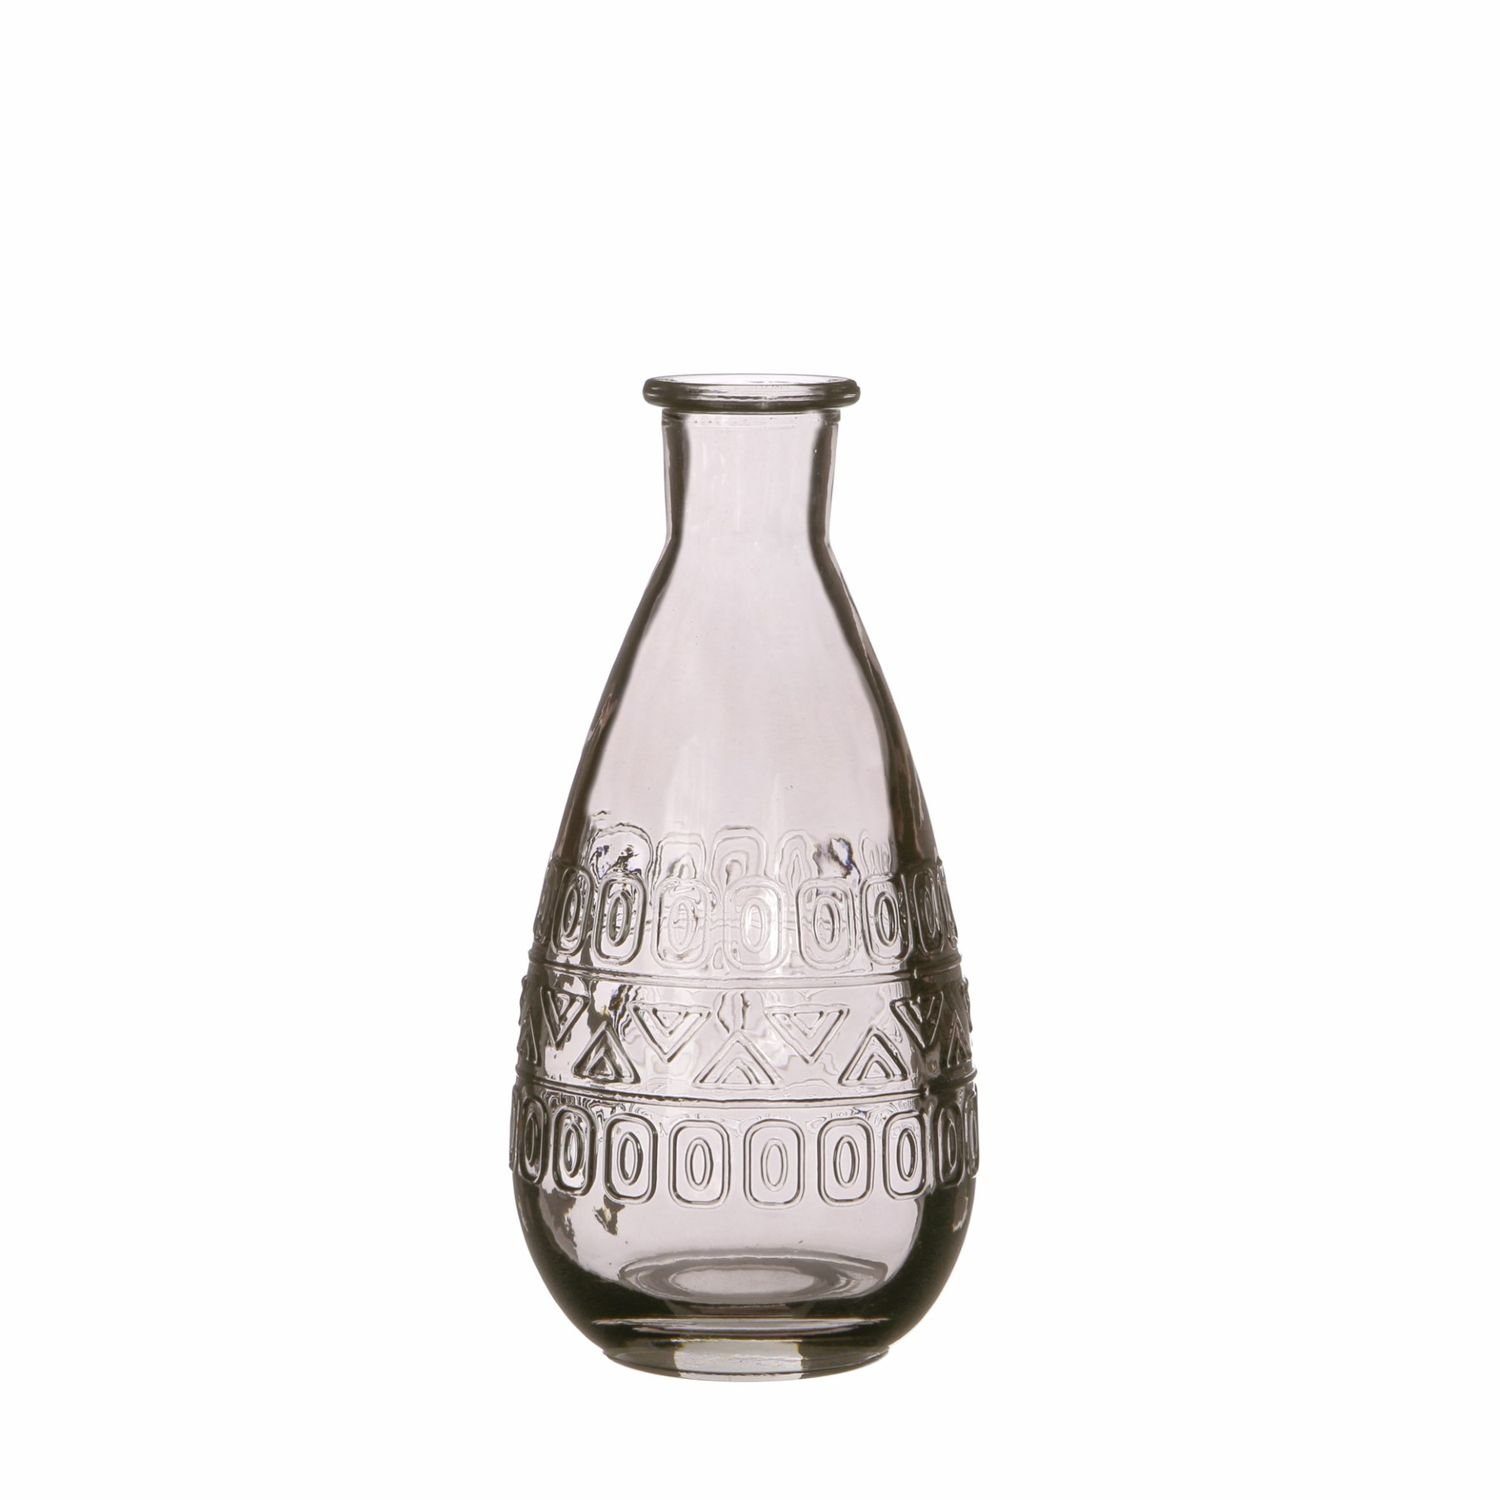 NaDeco Dekovase Glas Flasche Rome in Grau h. 15,8 cm Ø 7,5 cm